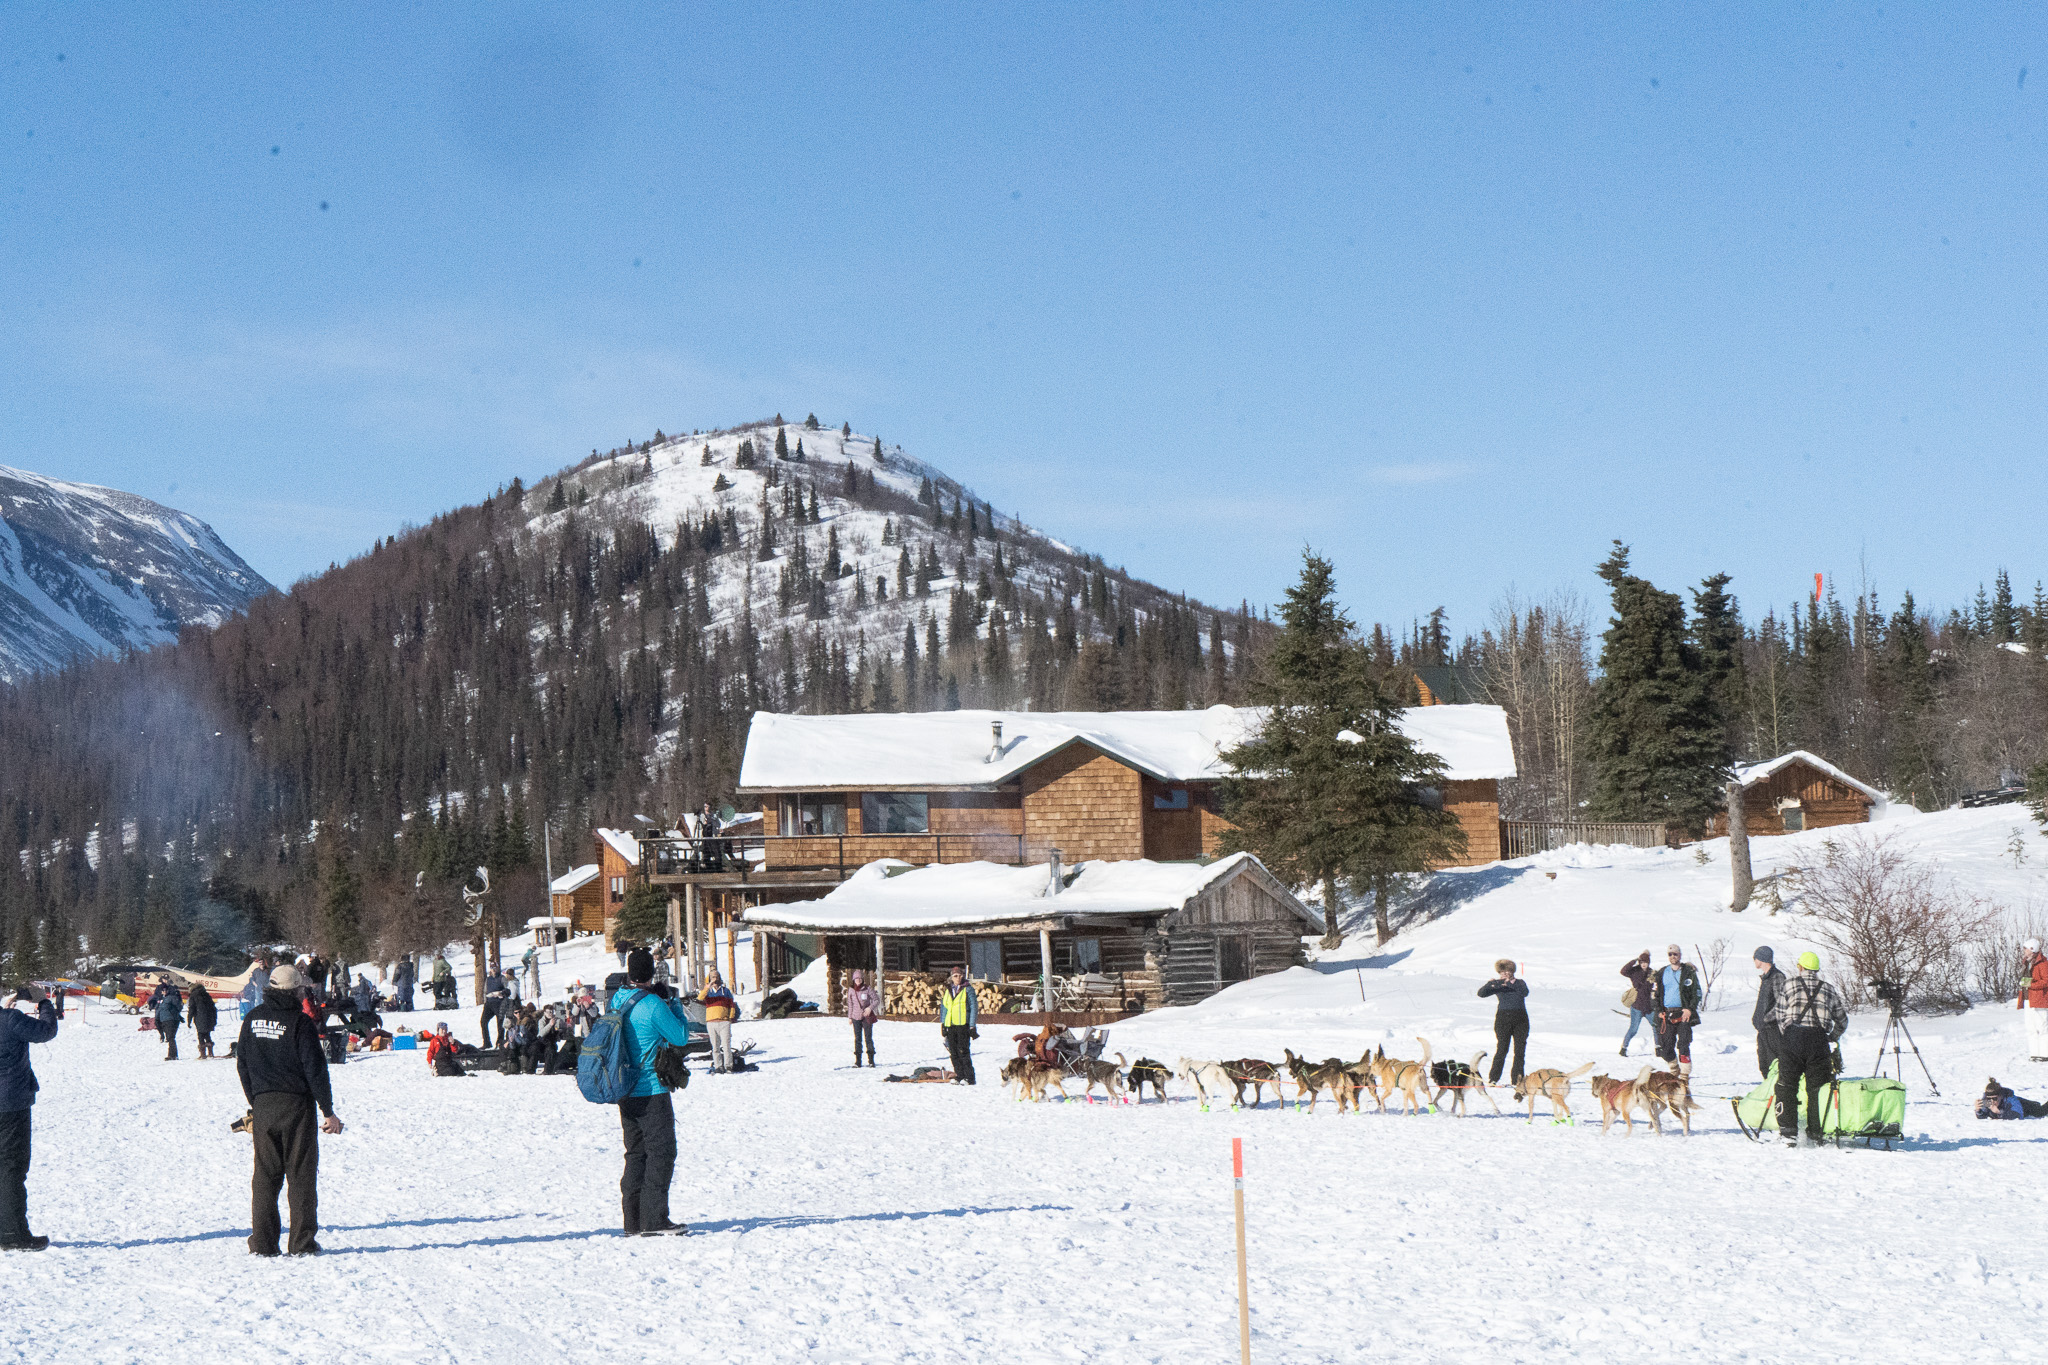 A musher runs towards a wooden ski lodge